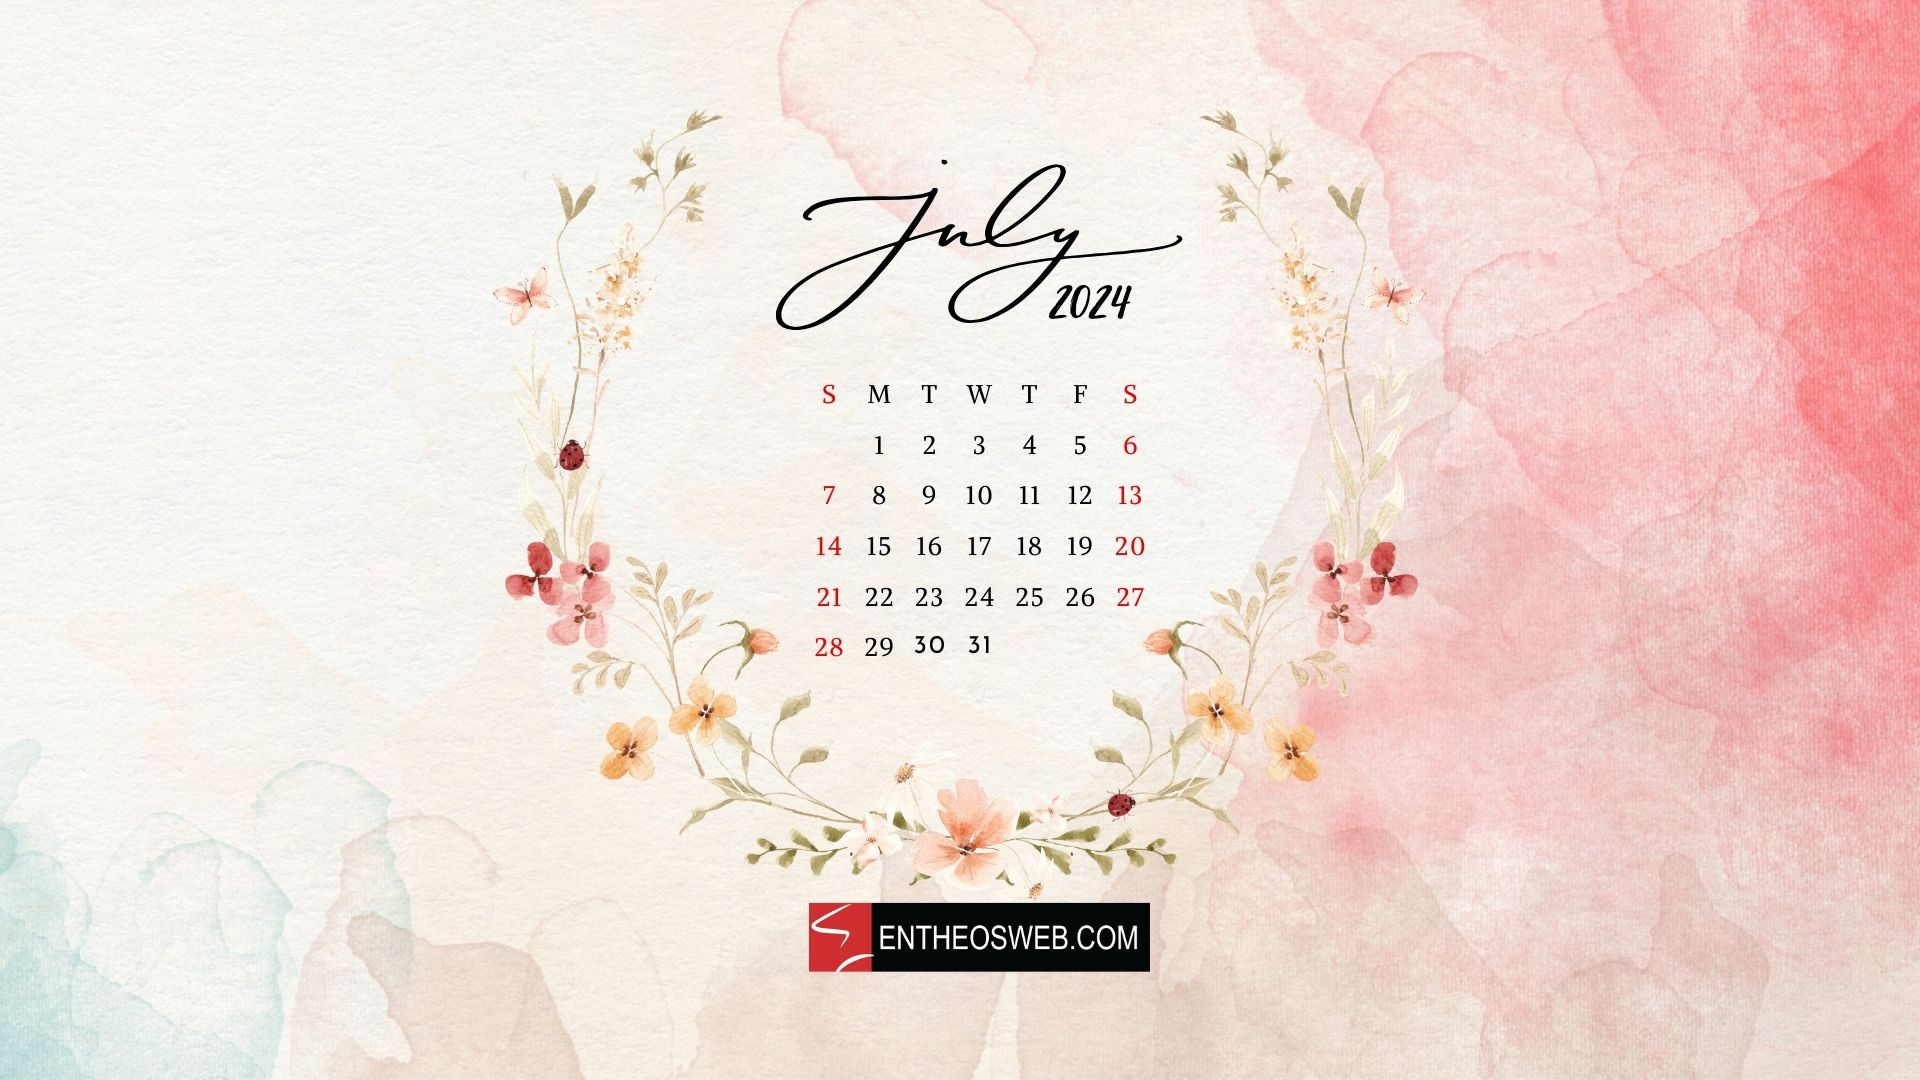 July 2024 Desktop Wallpaper Calendar | Entheosweb within July 2024 Desktop Calendar